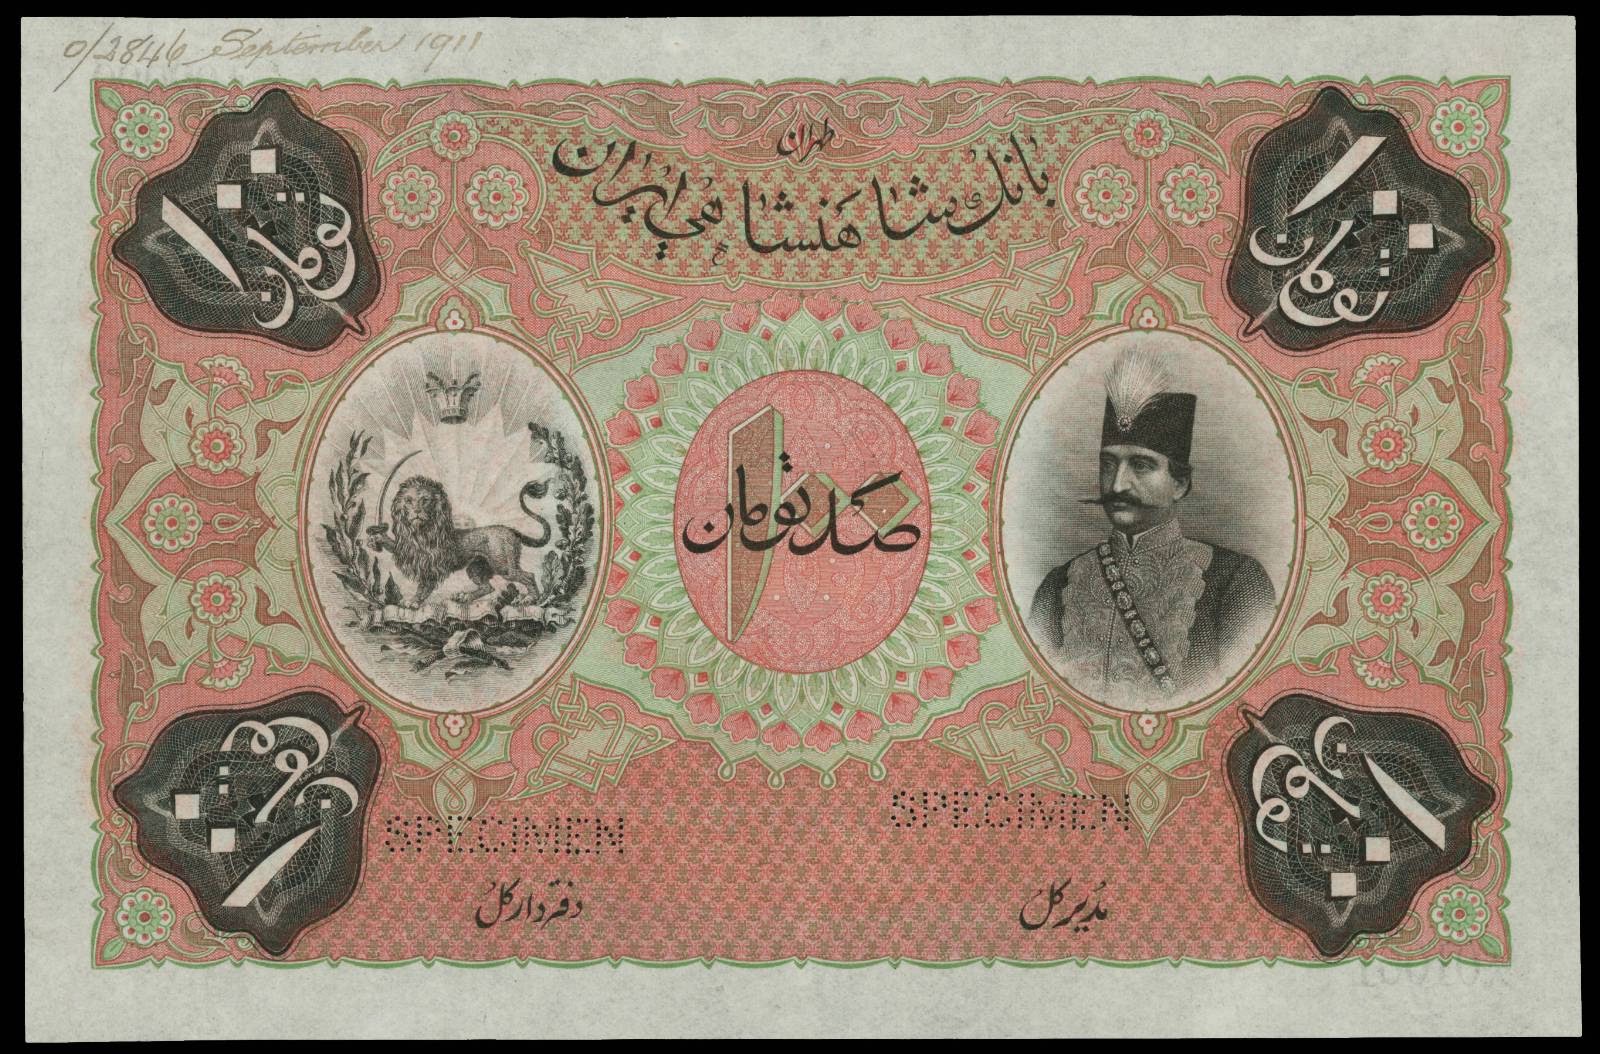 Iran banknotes 100 Tomans note 1890 Imperial bank of Persia, Naser al-Din Shah